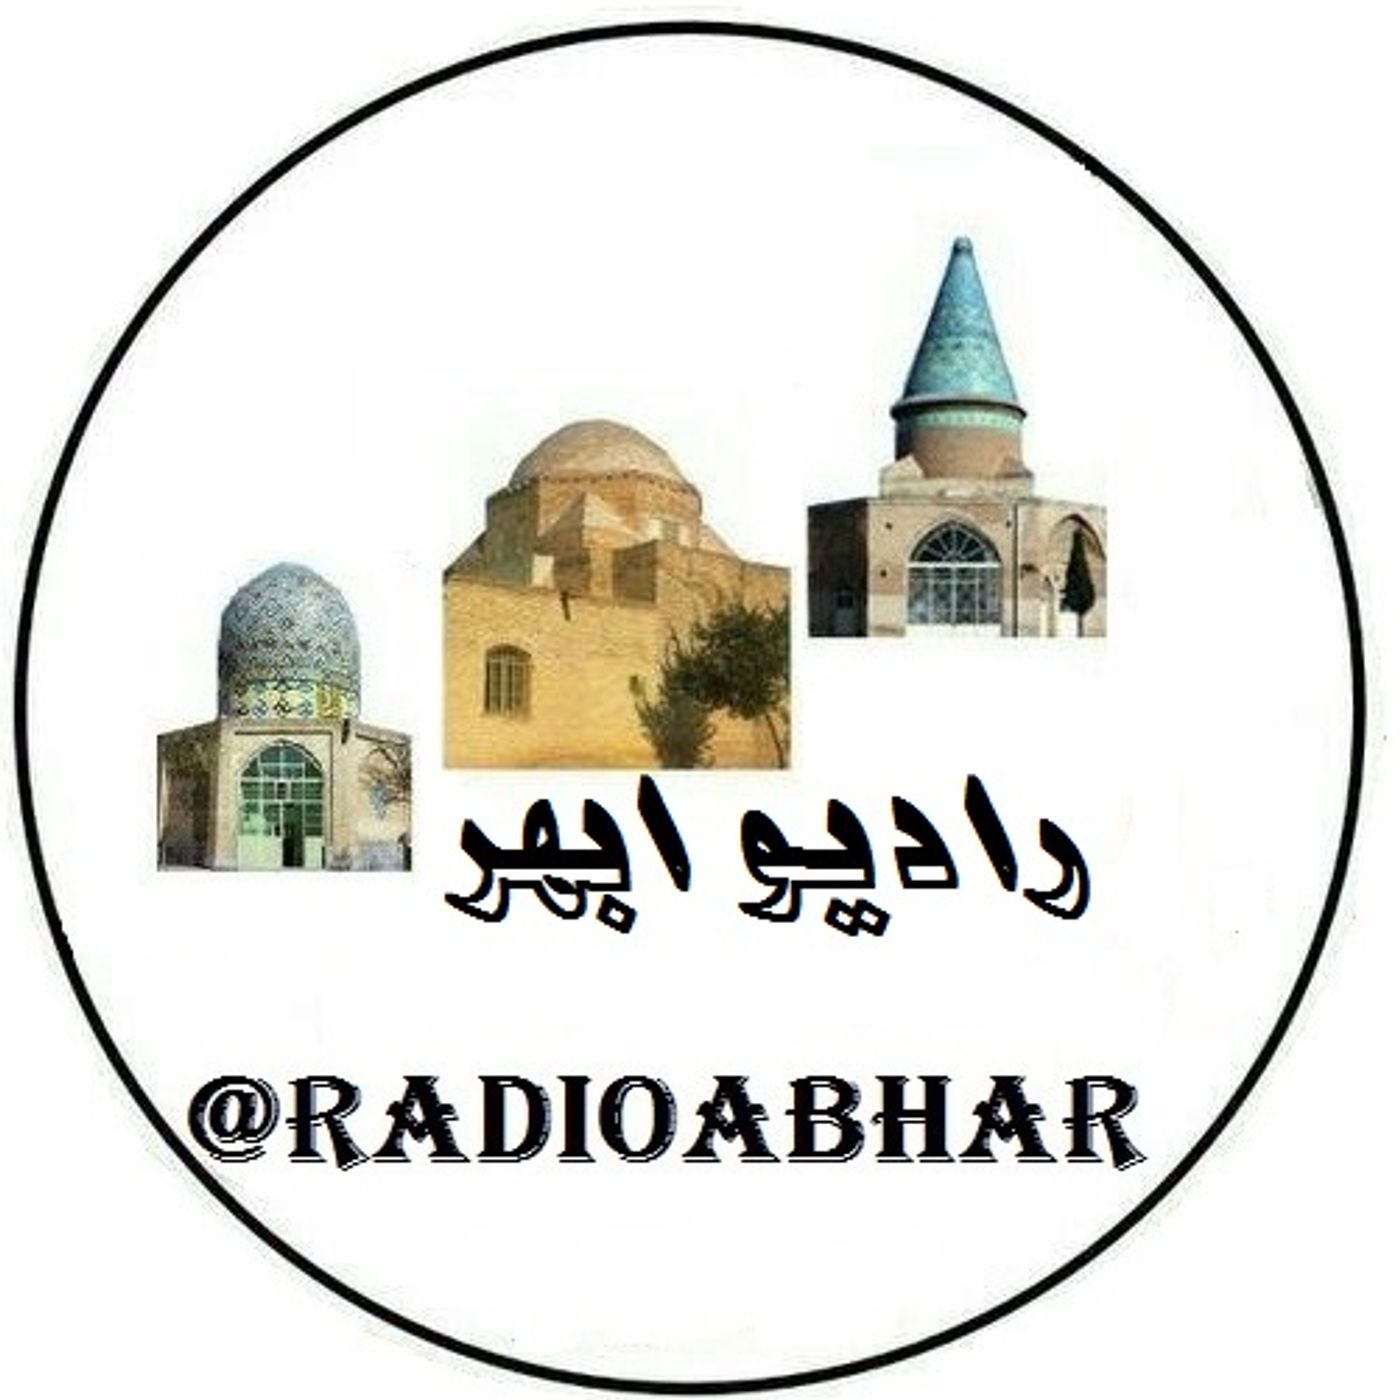 radioabhar's show